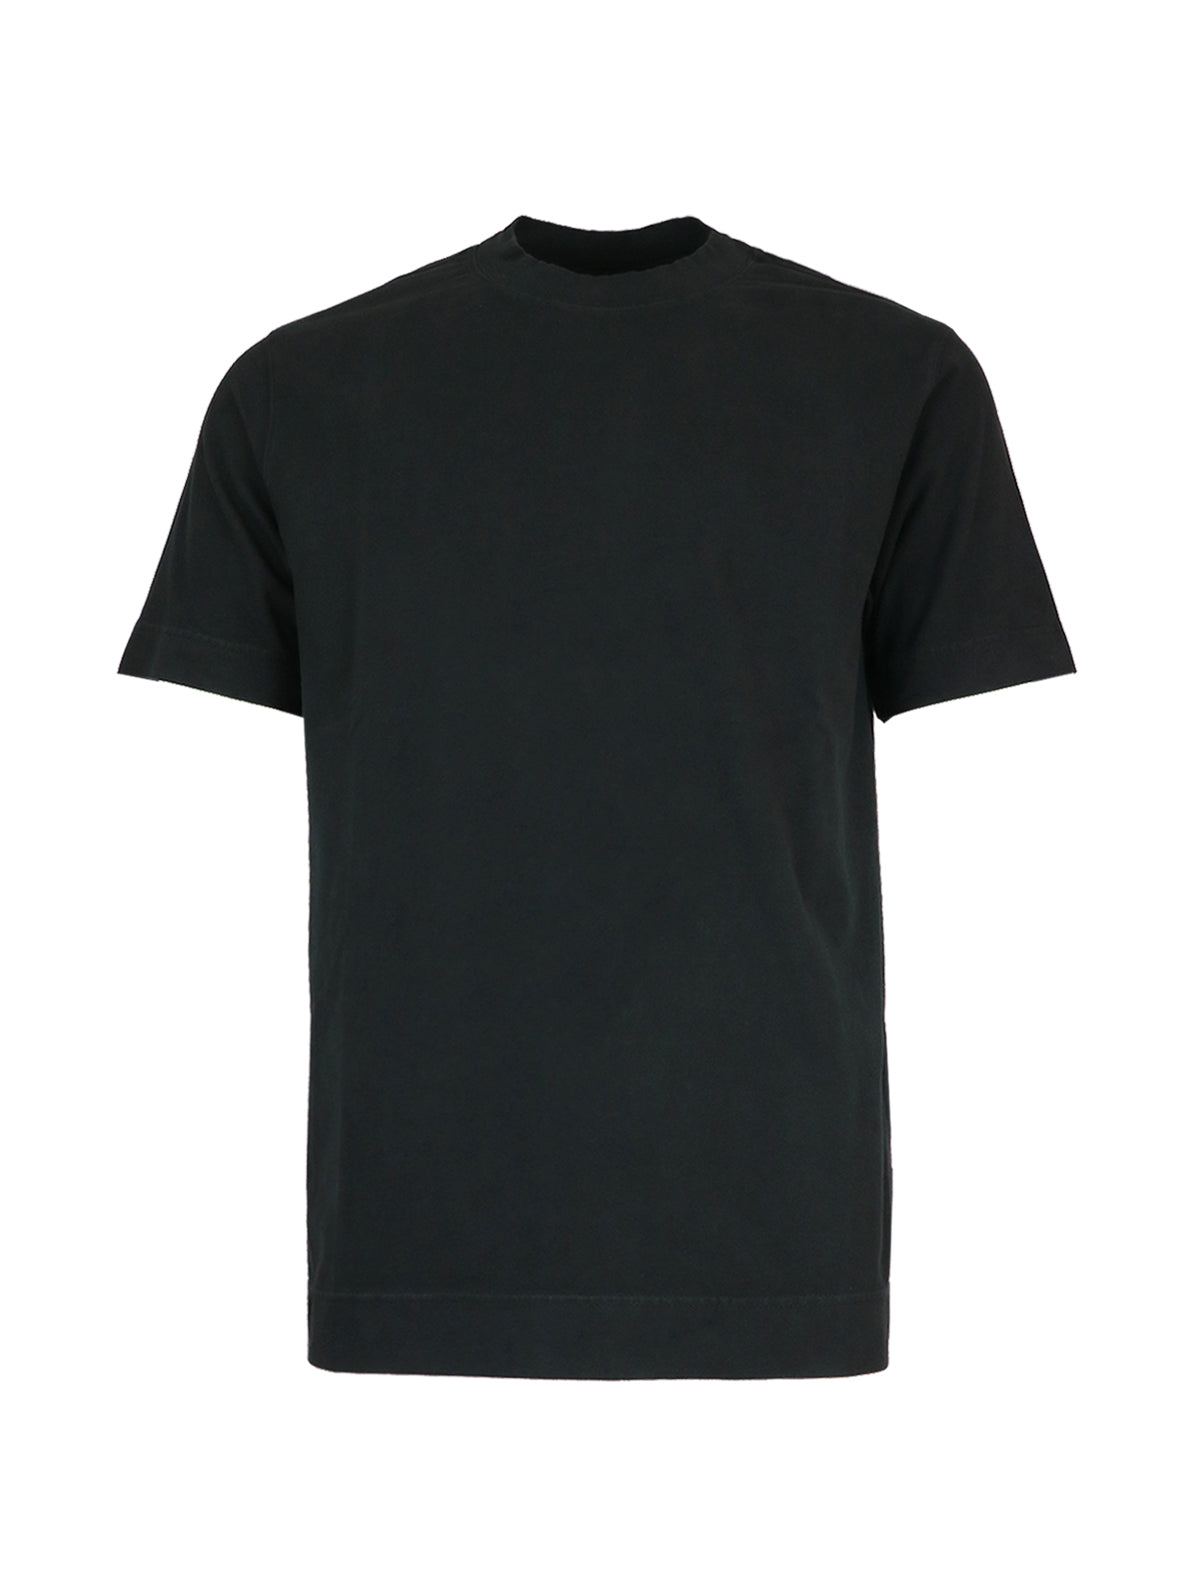 CIRCOLO 1901 Cotton-Stretch T-Shirt in Black | CLOSET Singapore